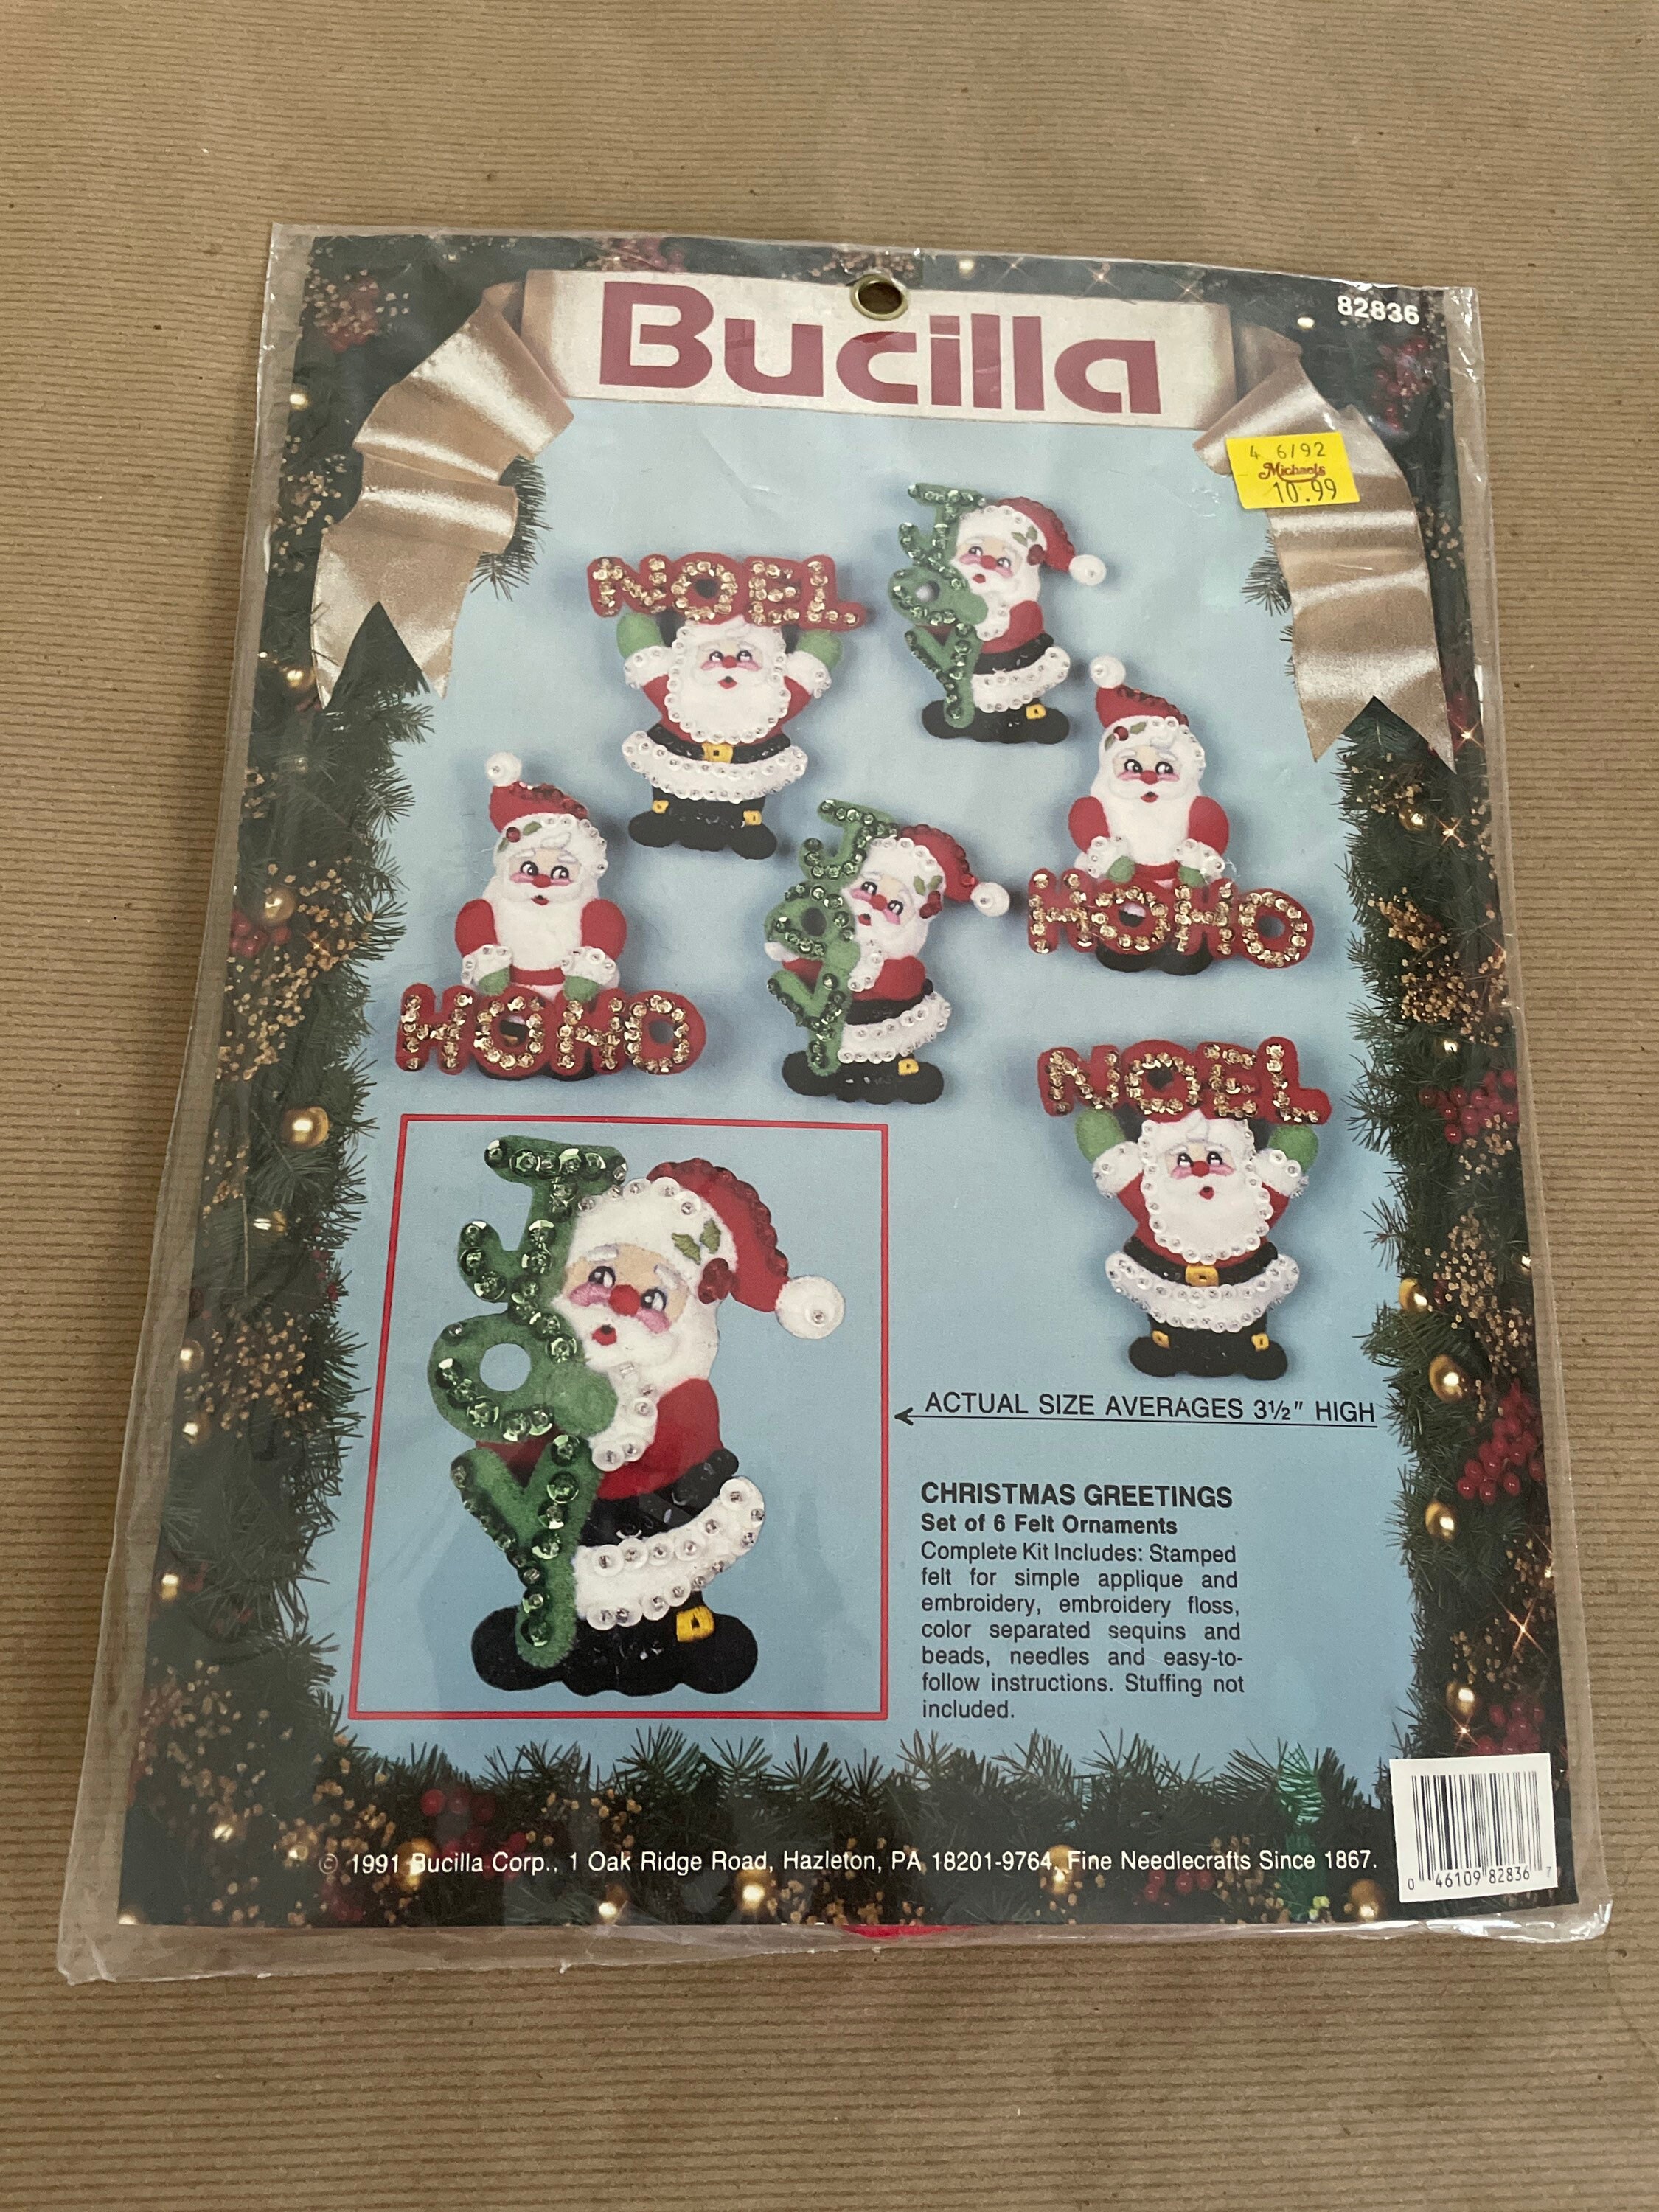 Vintage Bucilla Kit, 1970s Bucilla Jeweled Holiday Ornaments, Nursery  Rhymes Ornaments, NOS Felt Kit 3391, 1970s Christmas 